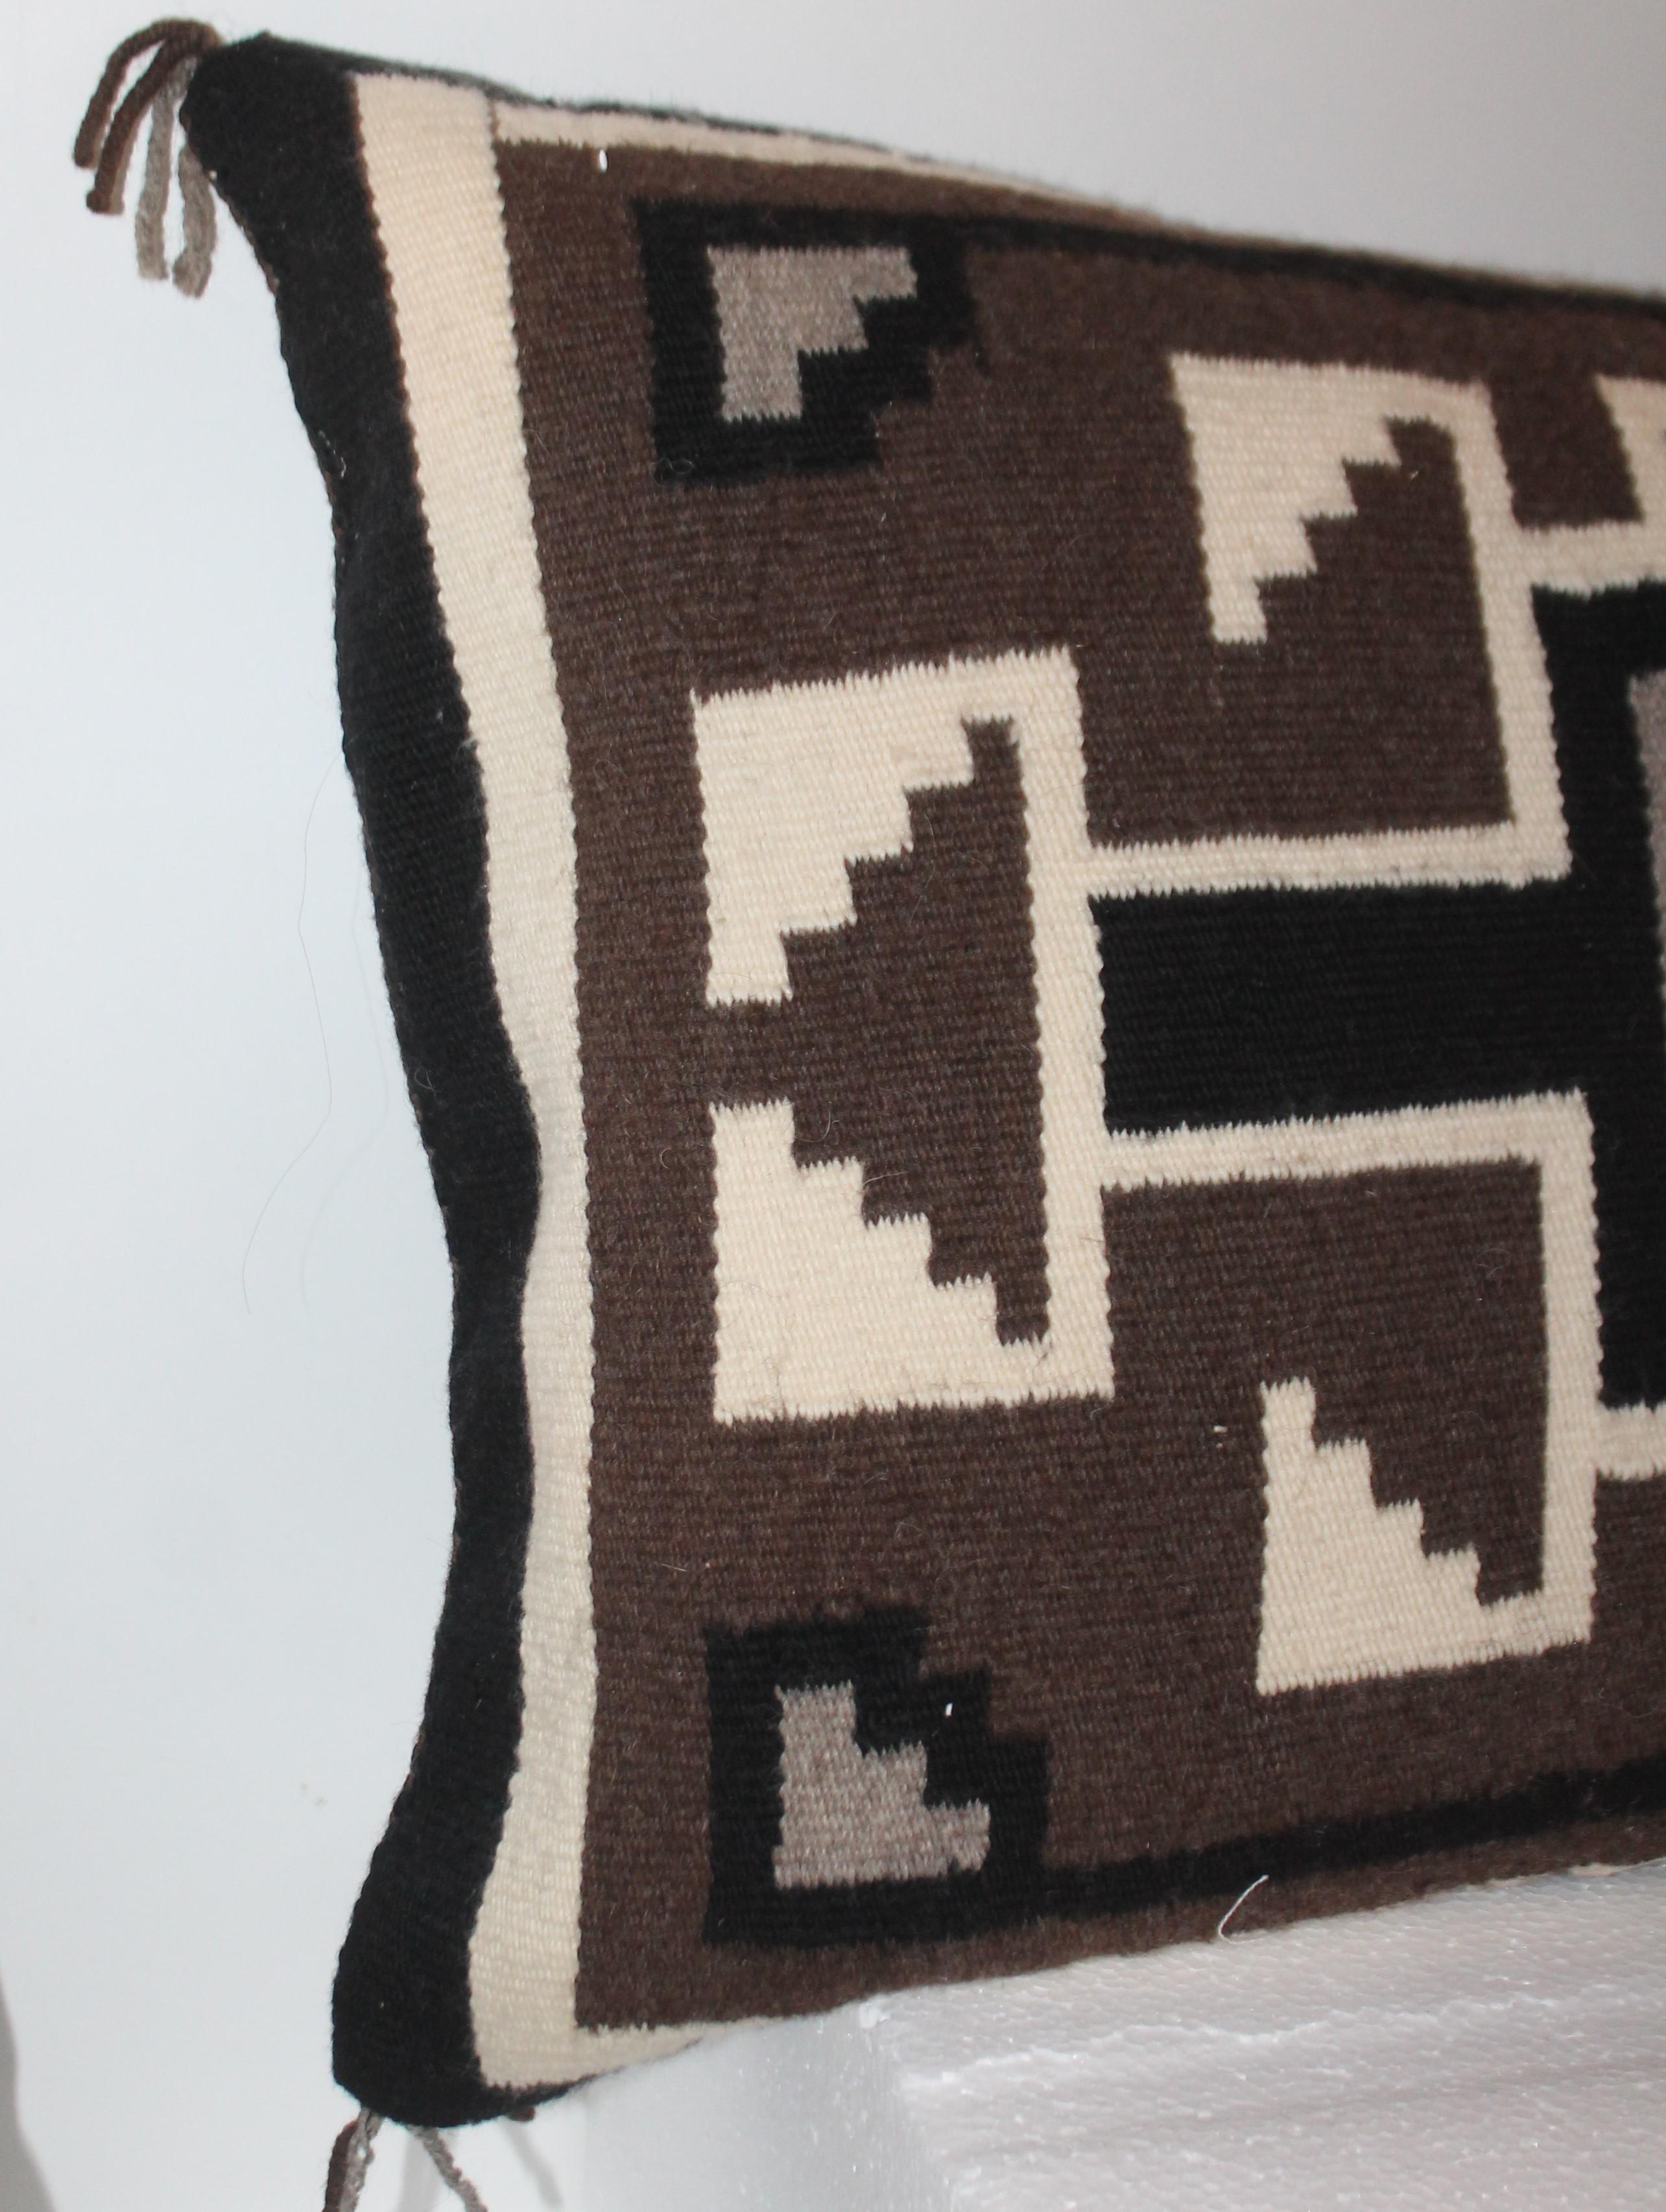 Adirondack Navajo Indian Weaving Geometric Bolster Pillow